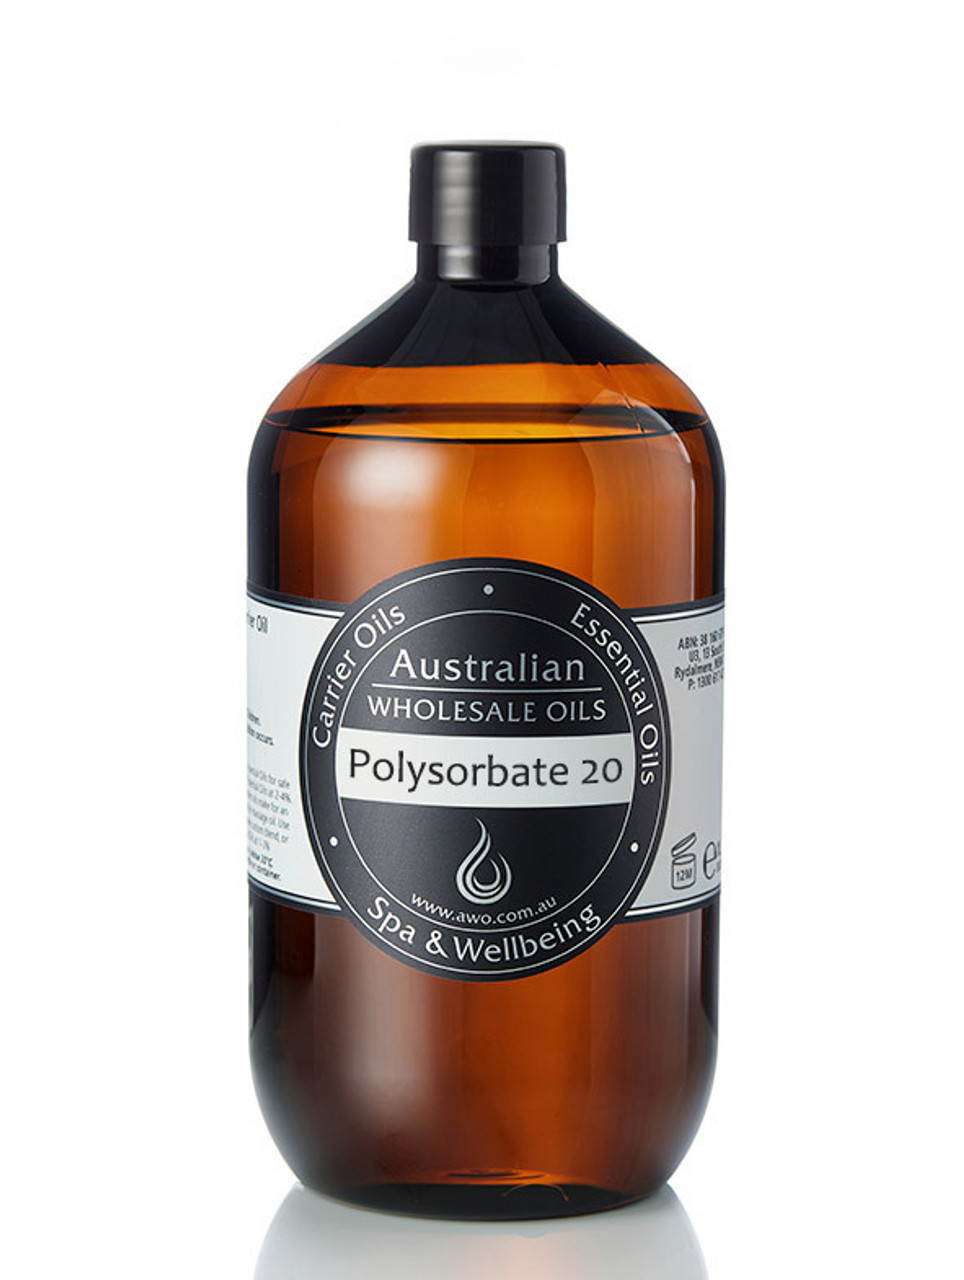 Polysorbate 20: Camden-Grey Essential Oils, Inc.